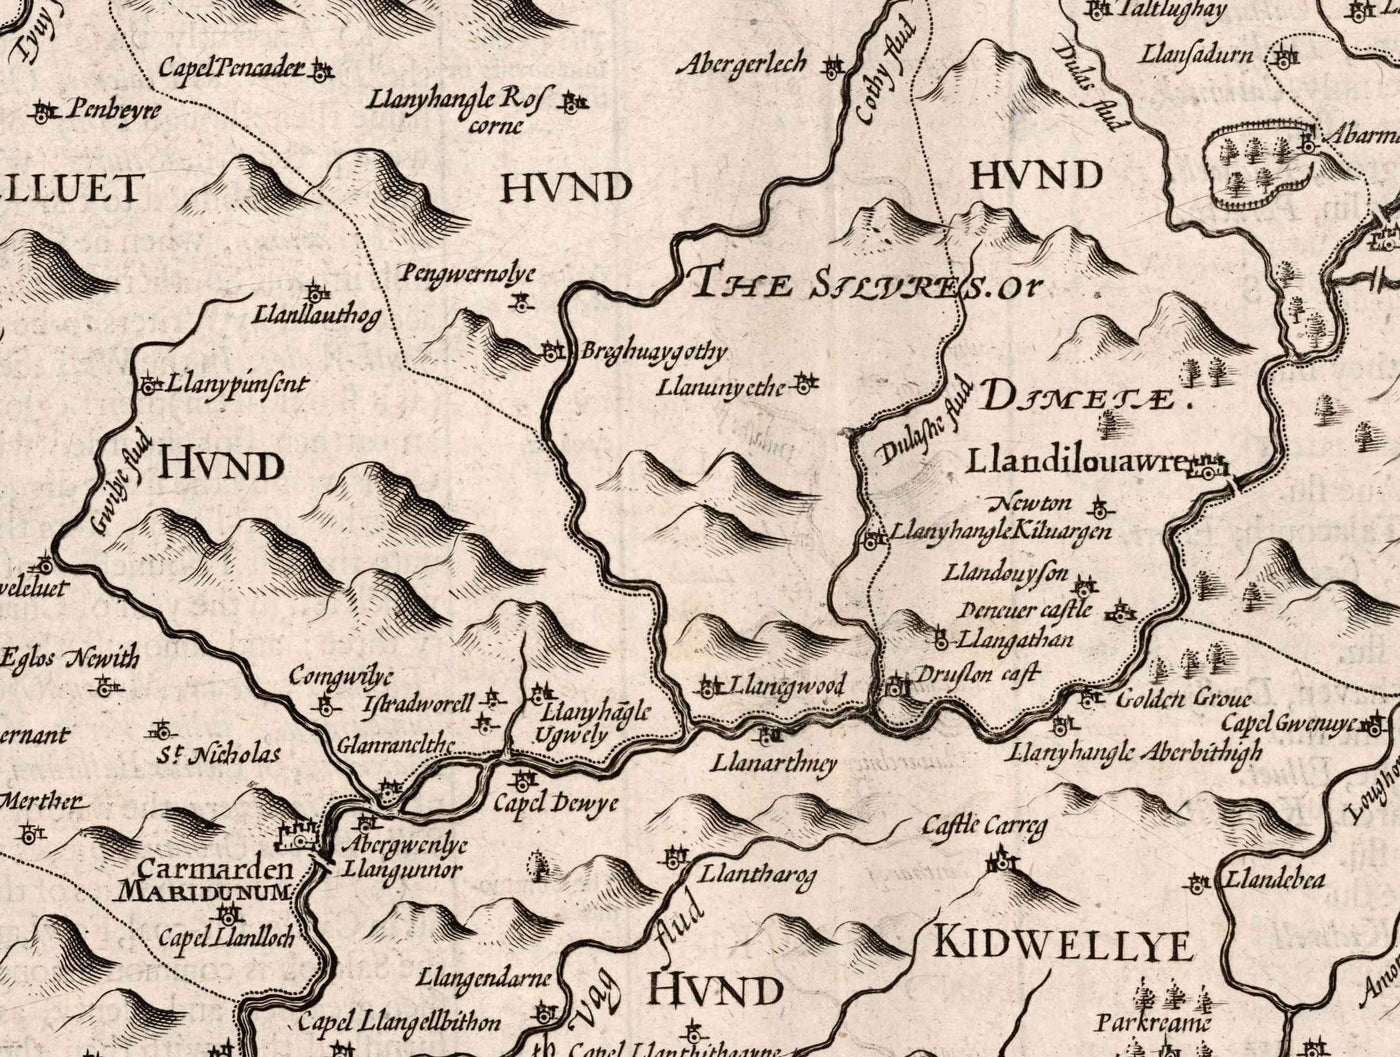 Old Monochrome Map of Carmarthenshire Wales, 1611 by John Speed - Carmarthen, Llanelli, Llandovery, Ammanford